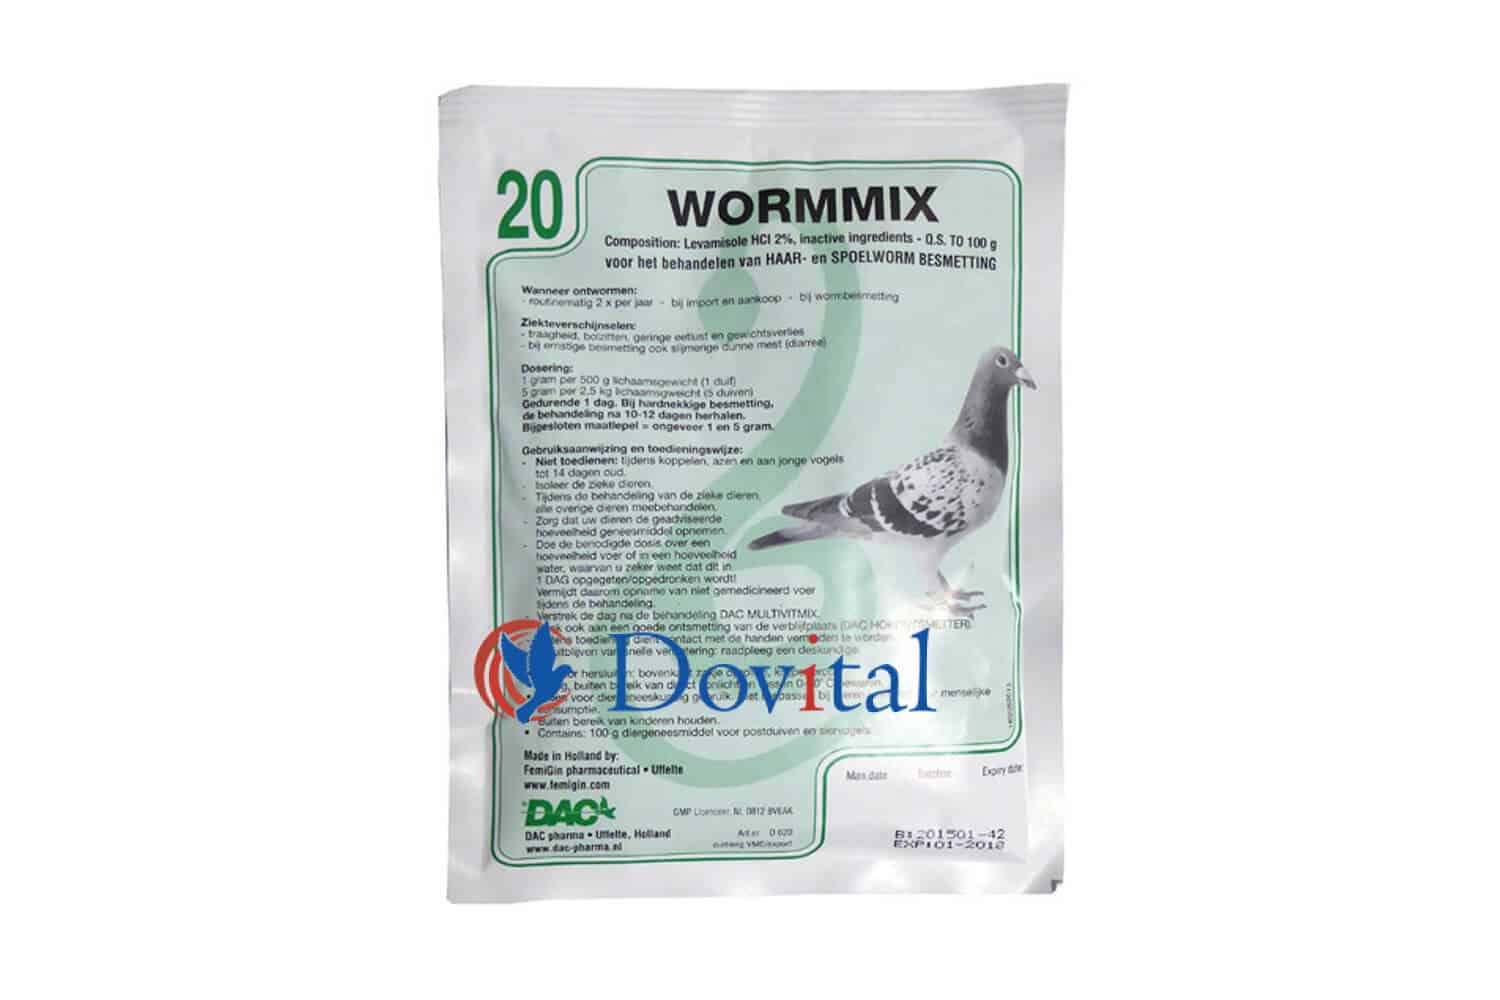 Dac Pharma Wormmix powder